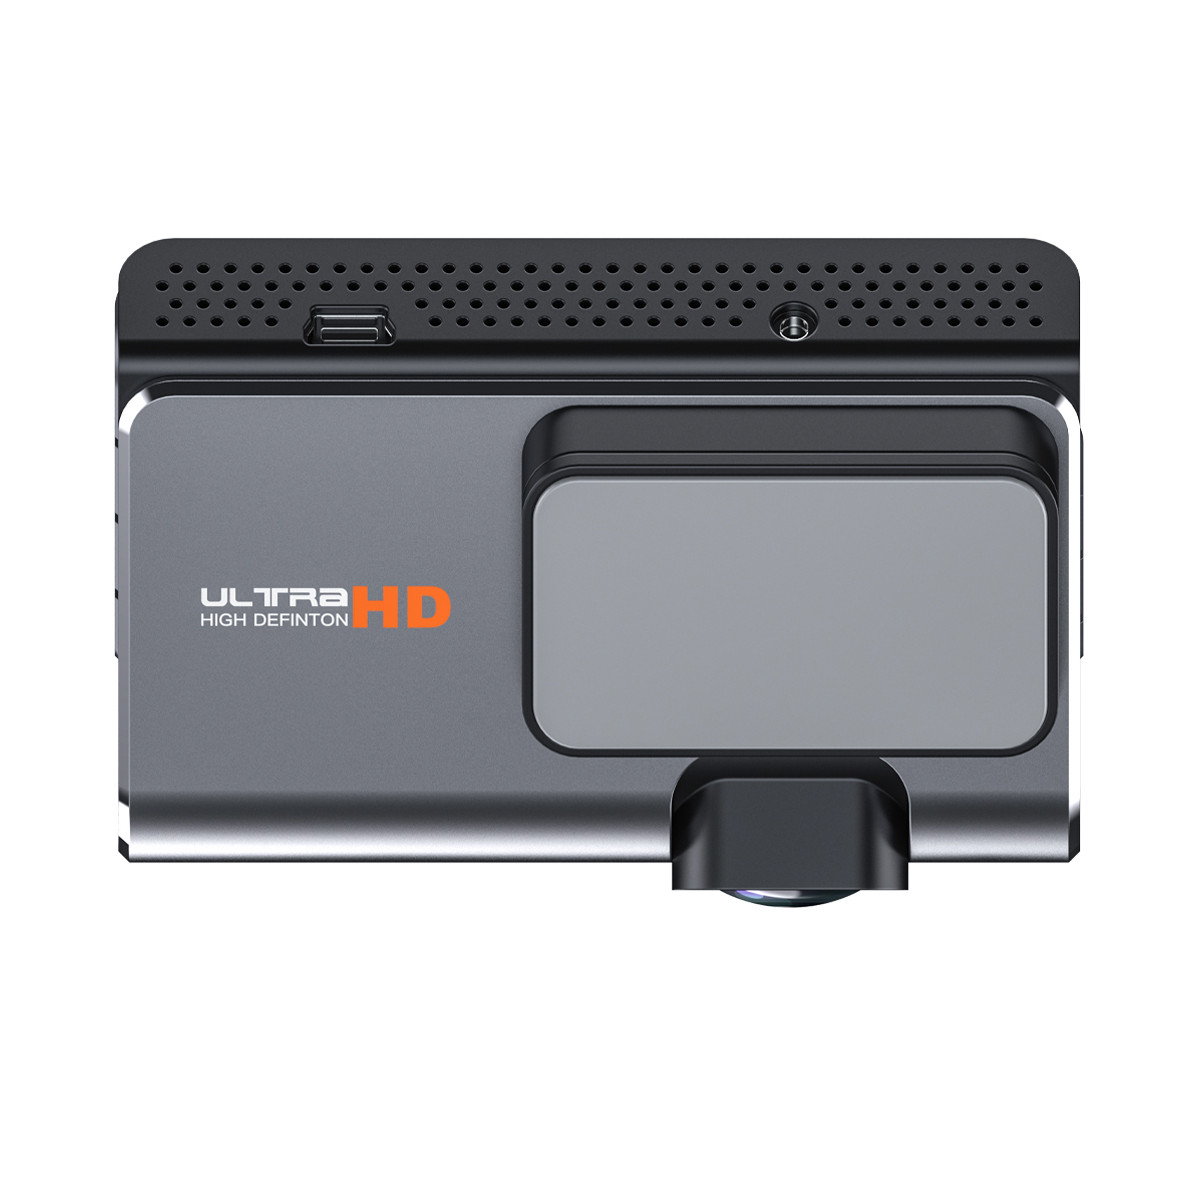 A900 4K+1080P Dash Cam Car DVR 2160P GPS WIFI Rear Camera Support G Sensor Parking Monitor Motion Detection Loop Recording